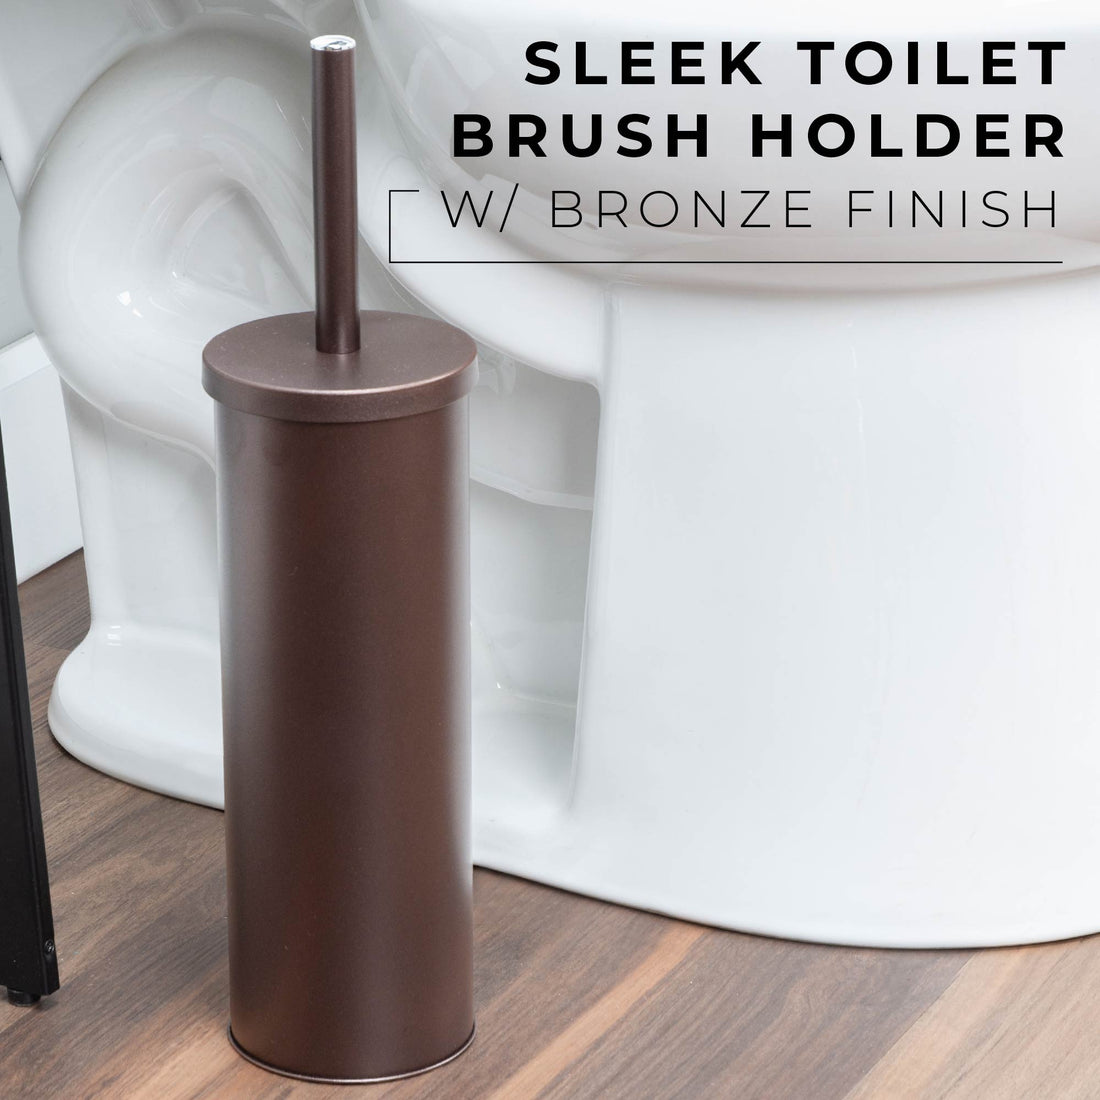 Toilet Brush and Holder (Bronze Finish) - Utility sinks vanites Tehila